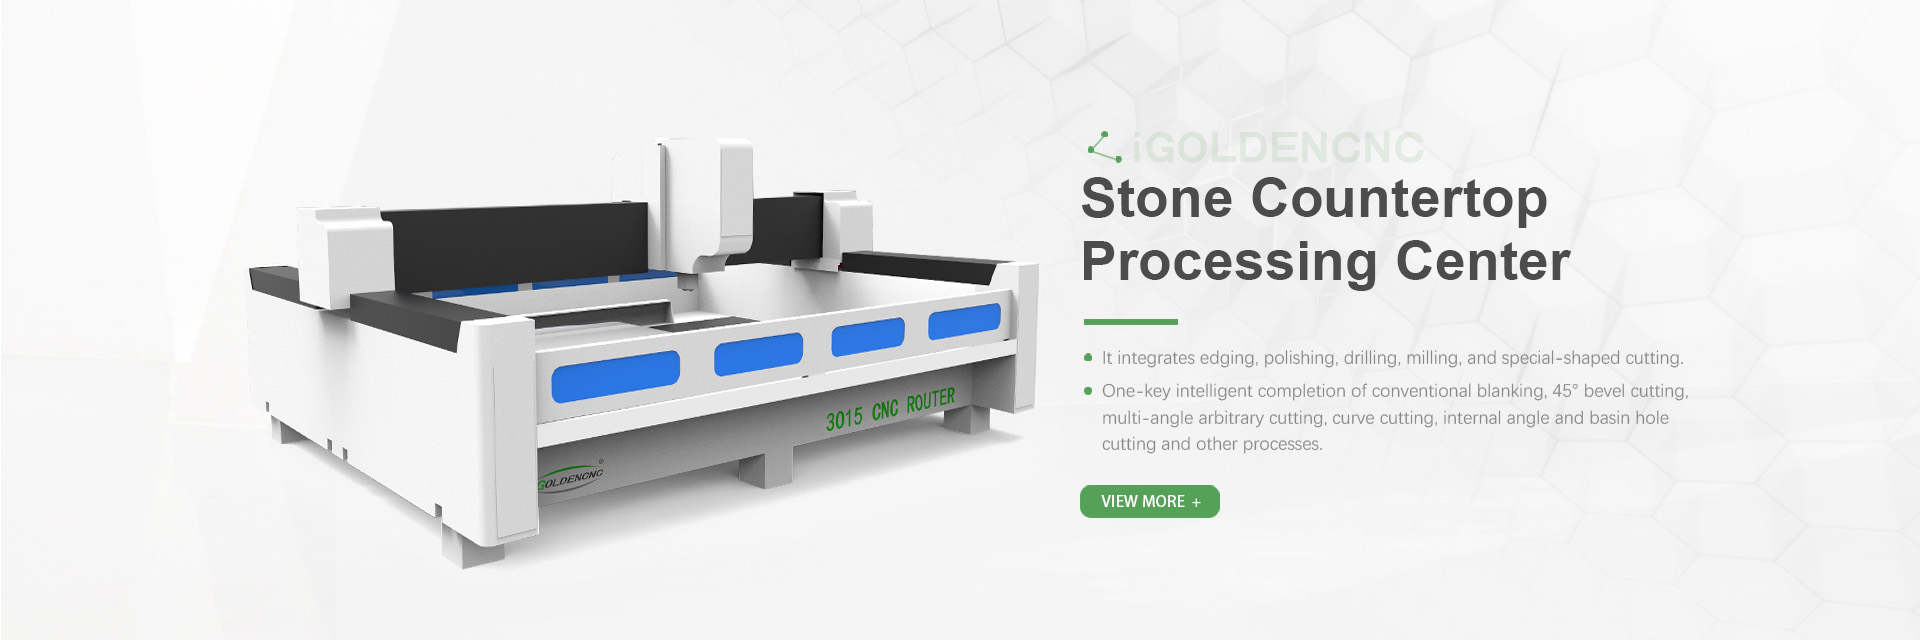 stone countertop processing center